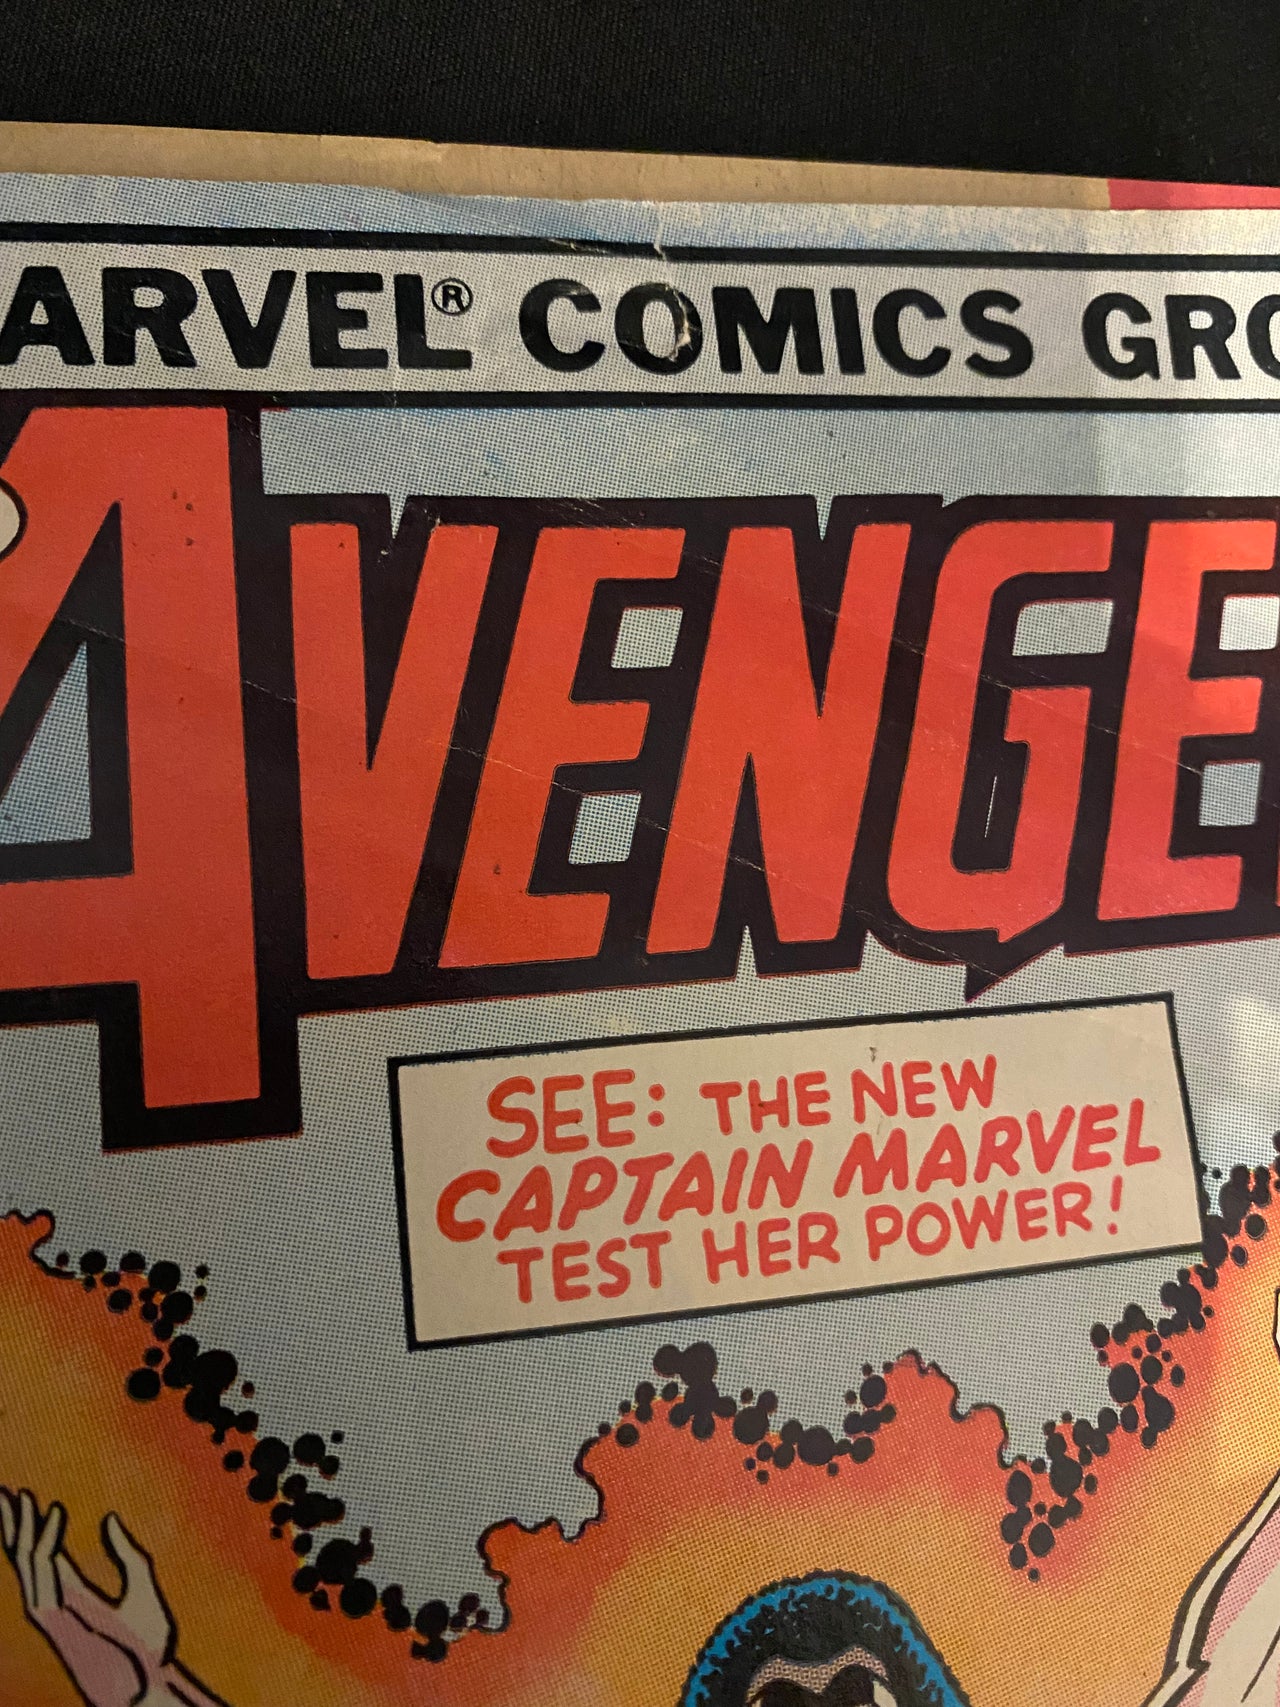 The Avengers #227 2nd App of Monica Rambeau (Captain Marvel)